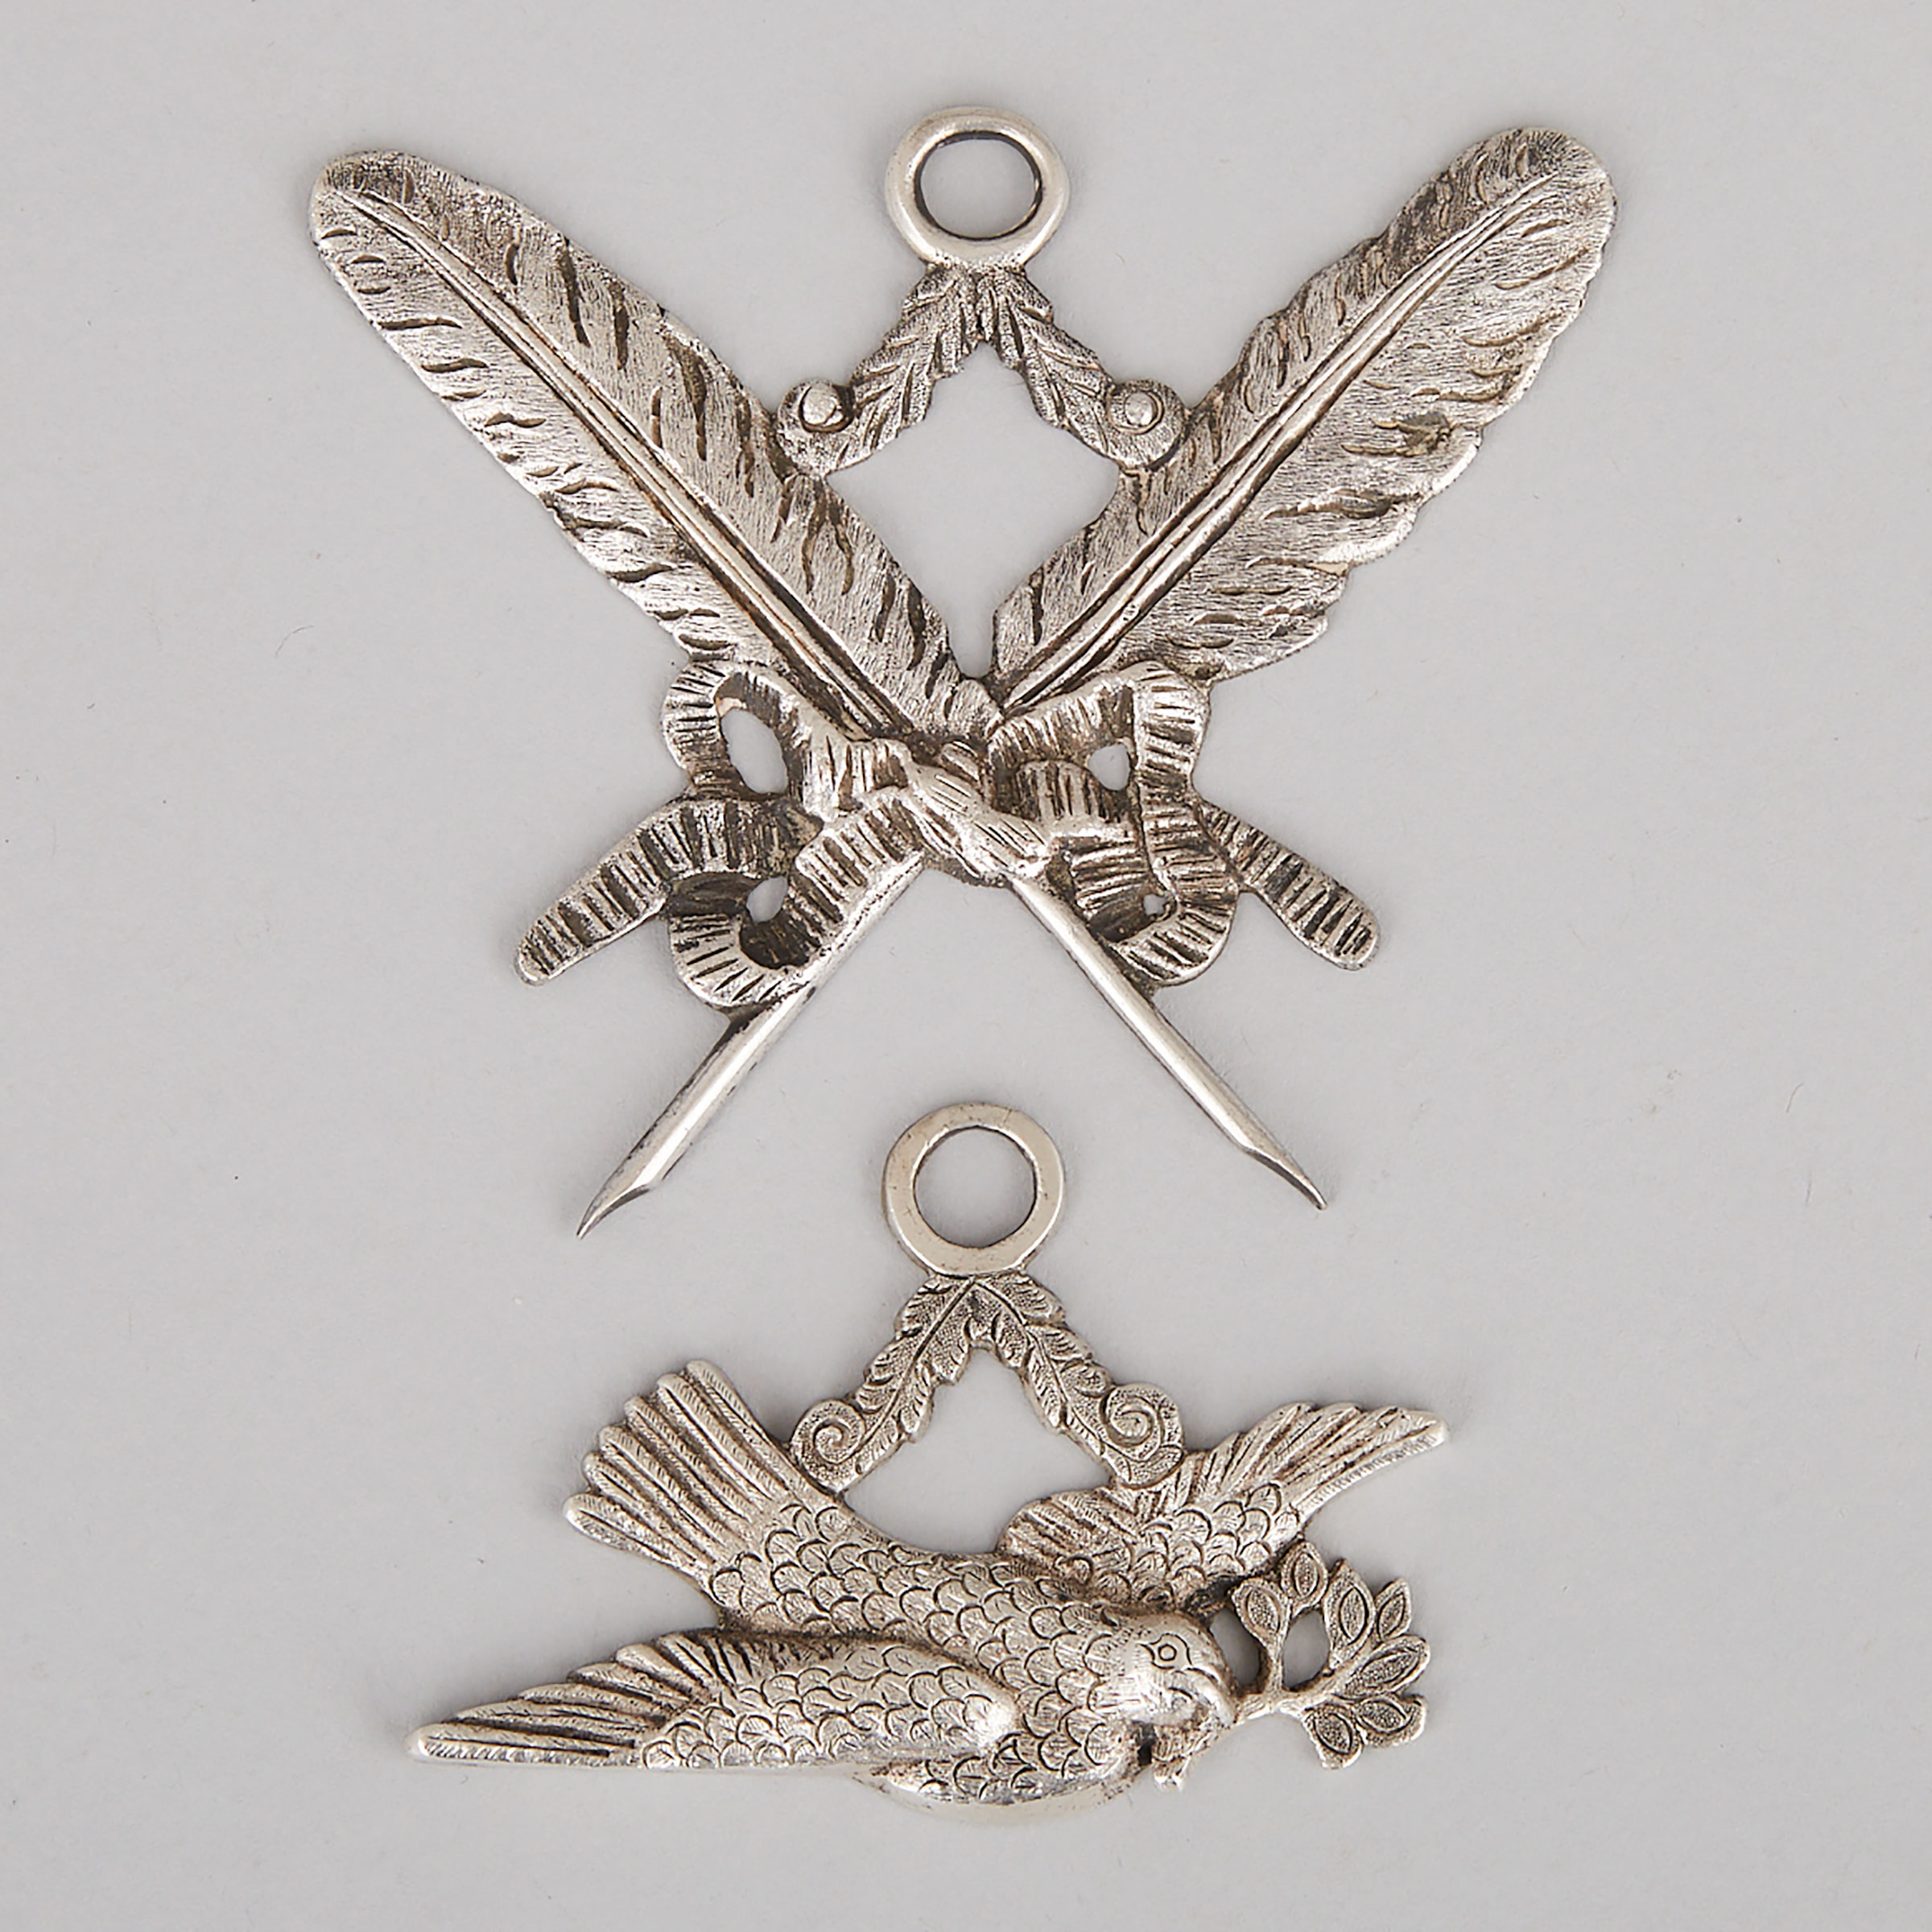 Two Canadian Silver Masonic Pendants, William C. Morrison,Toronto, Ont., c.1875